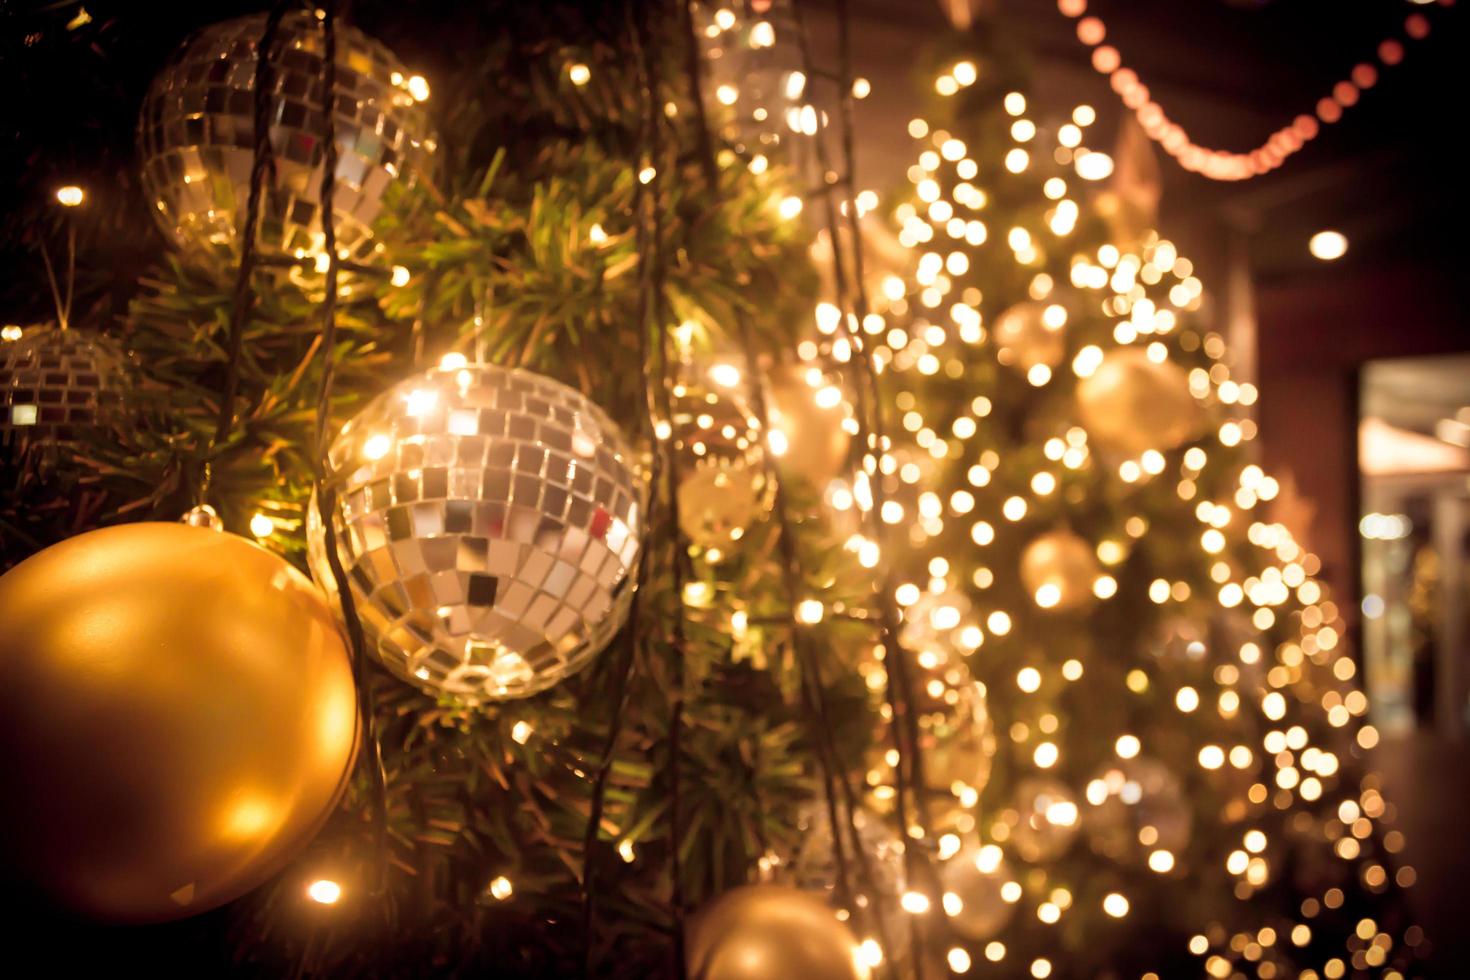 Christmas tree, ornaments, and lights photo